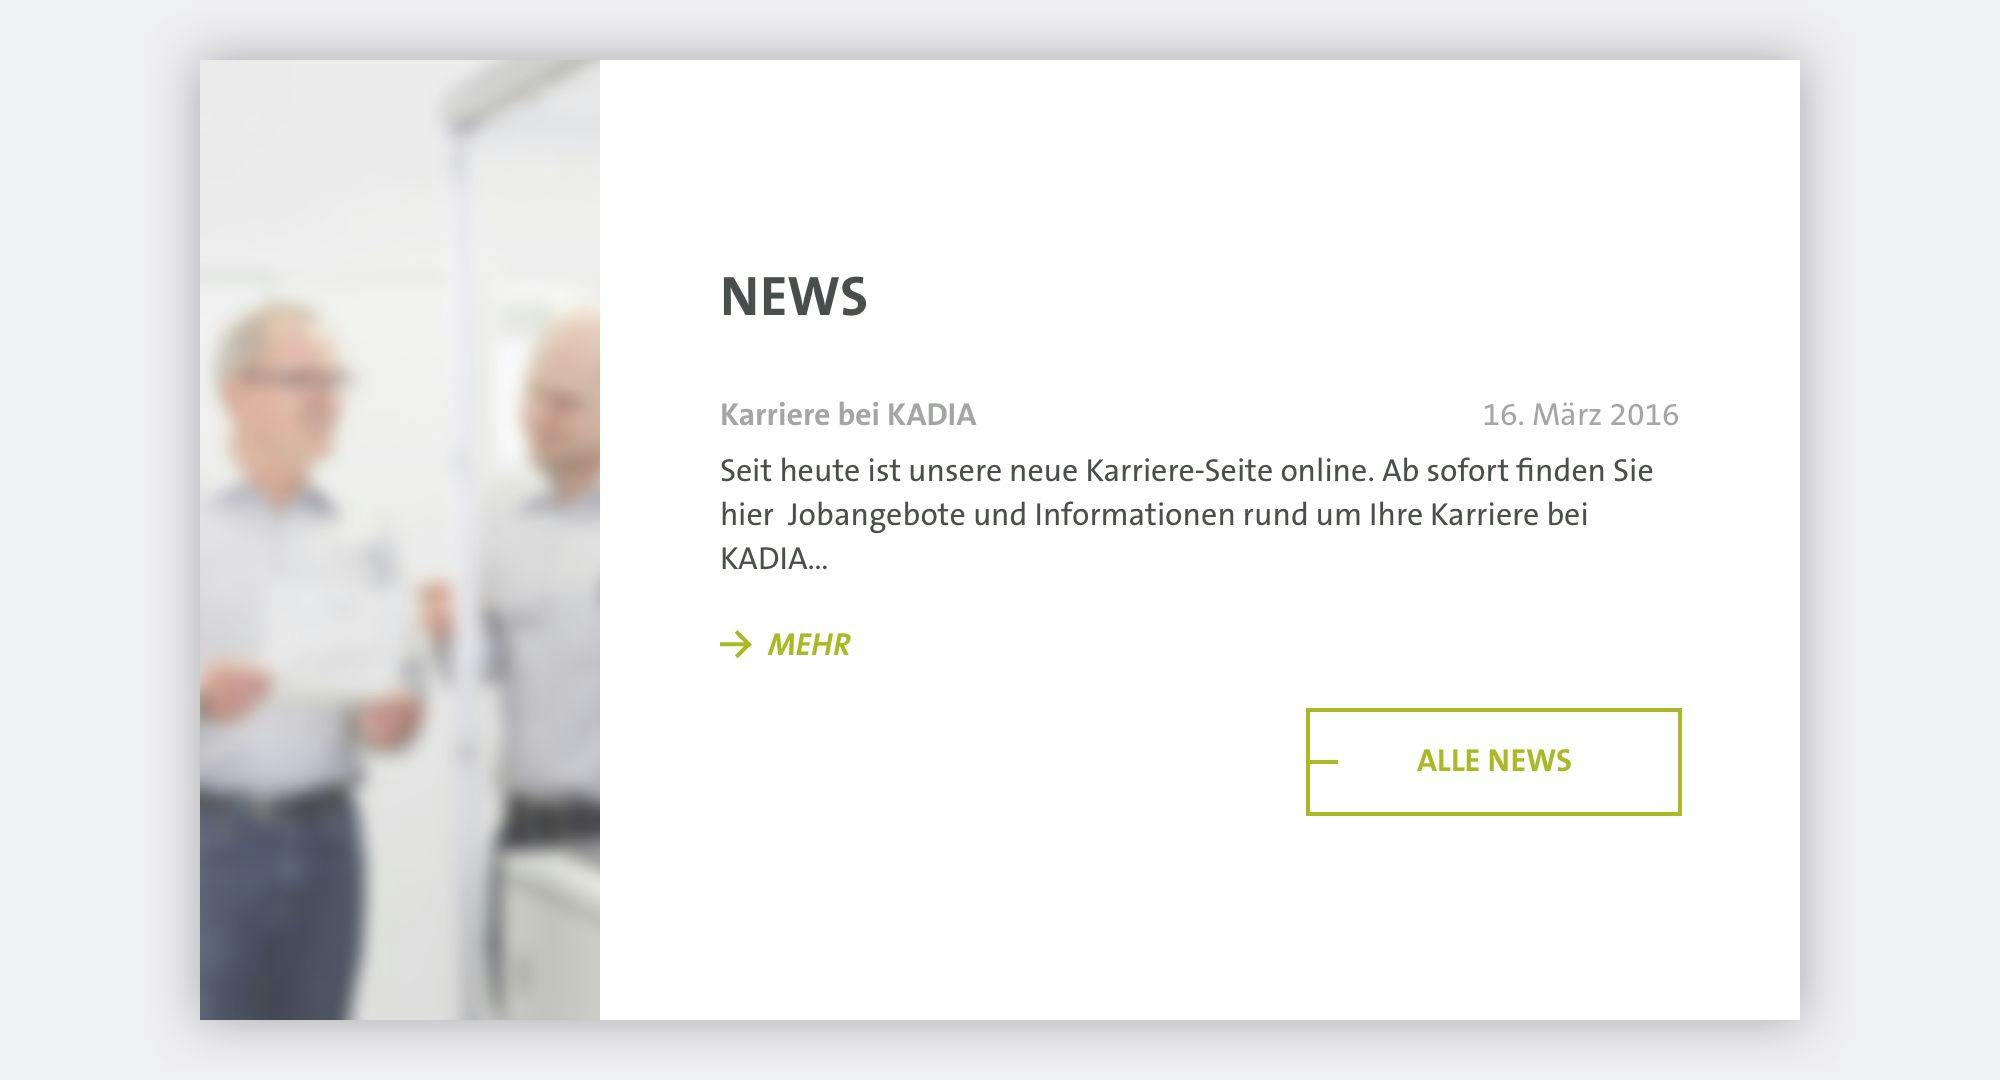 News card component for the KADIA website